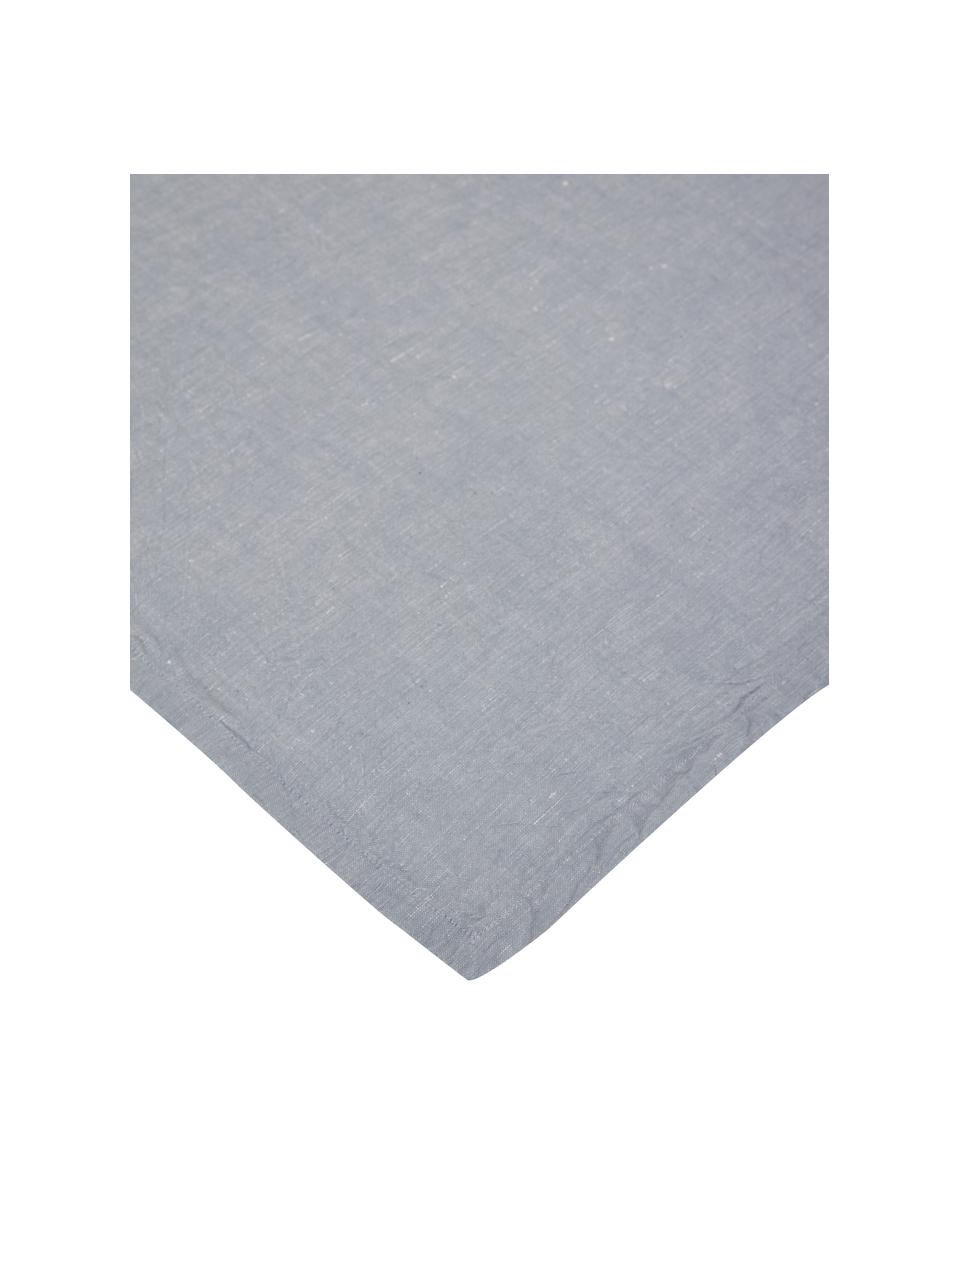 Tafelkleed Abinadi van katoen/linnen in lichtblauw, 50% katoen, 50% linnen, Lichtblauw, Voor 6 - 10 personen (B 170 x L 250 cm)